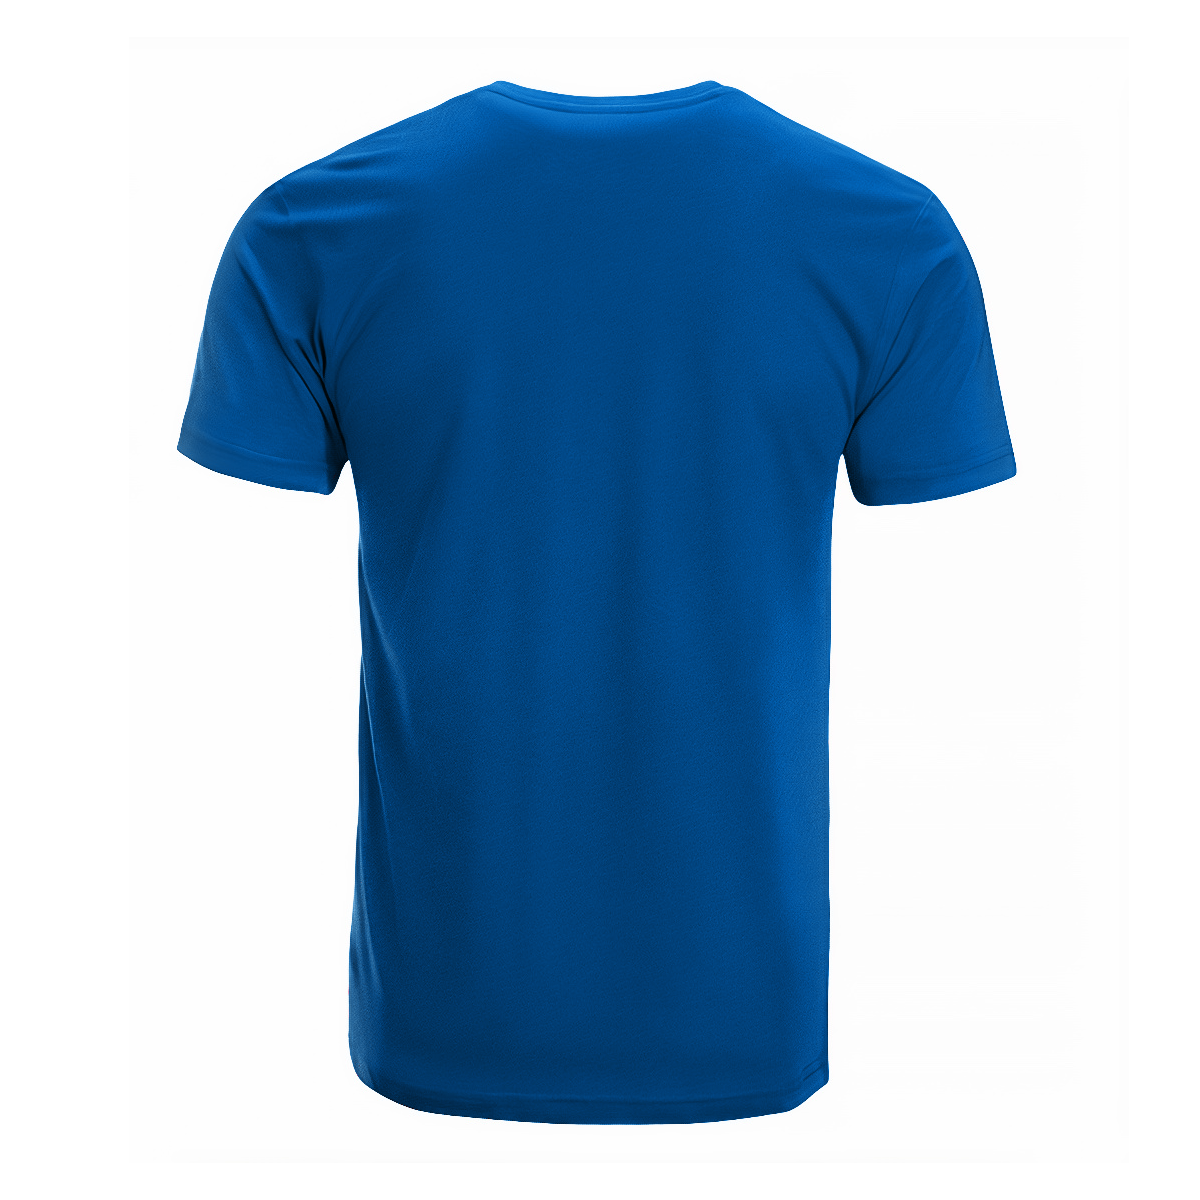 Cunningham Tartan Crest T-shirt - I'm not yelling style